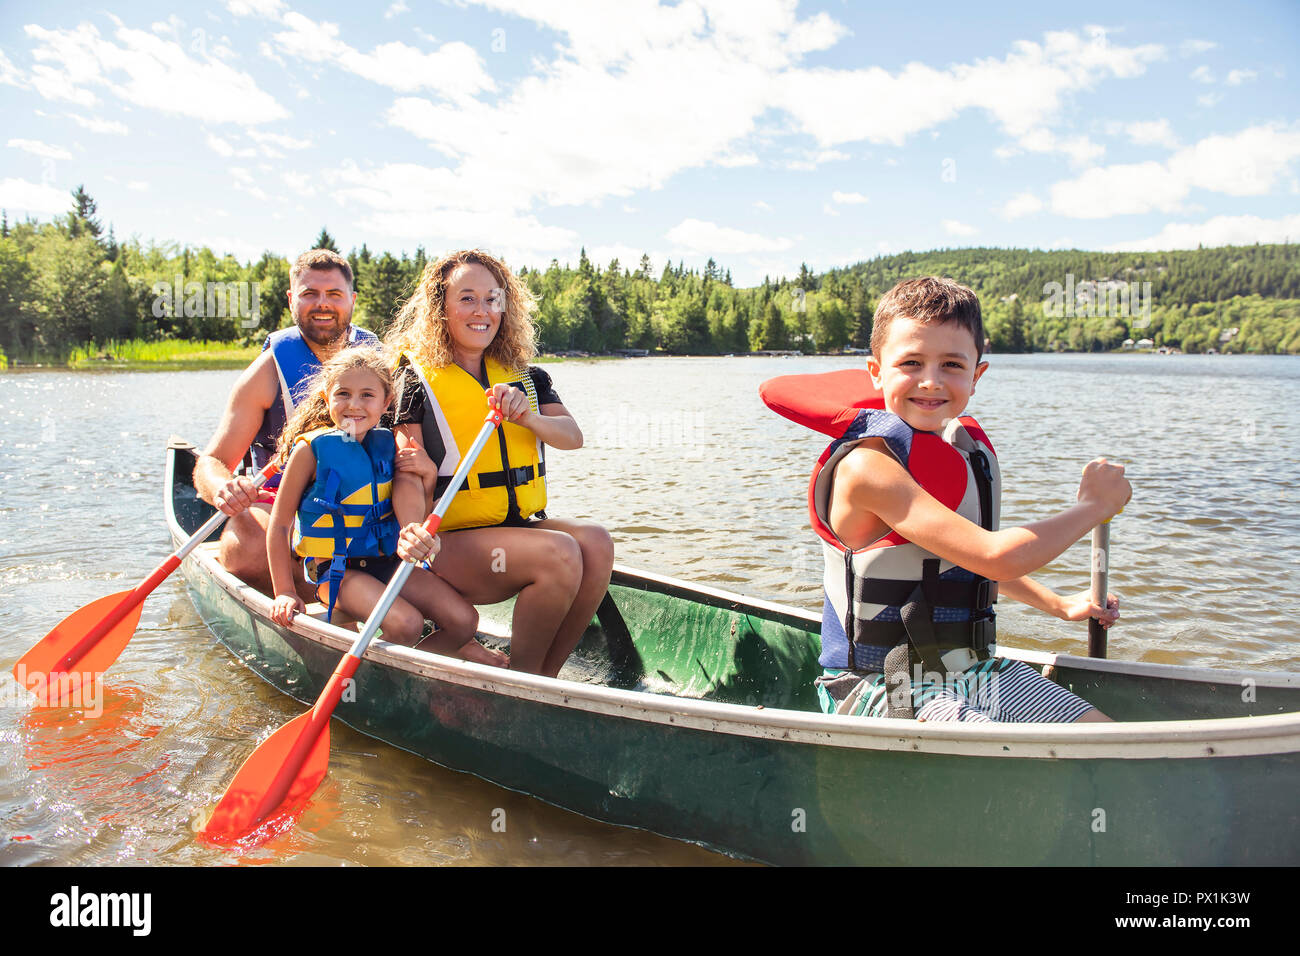 Family in a Canoe on a Lake having fun Stock Photo - Alamy